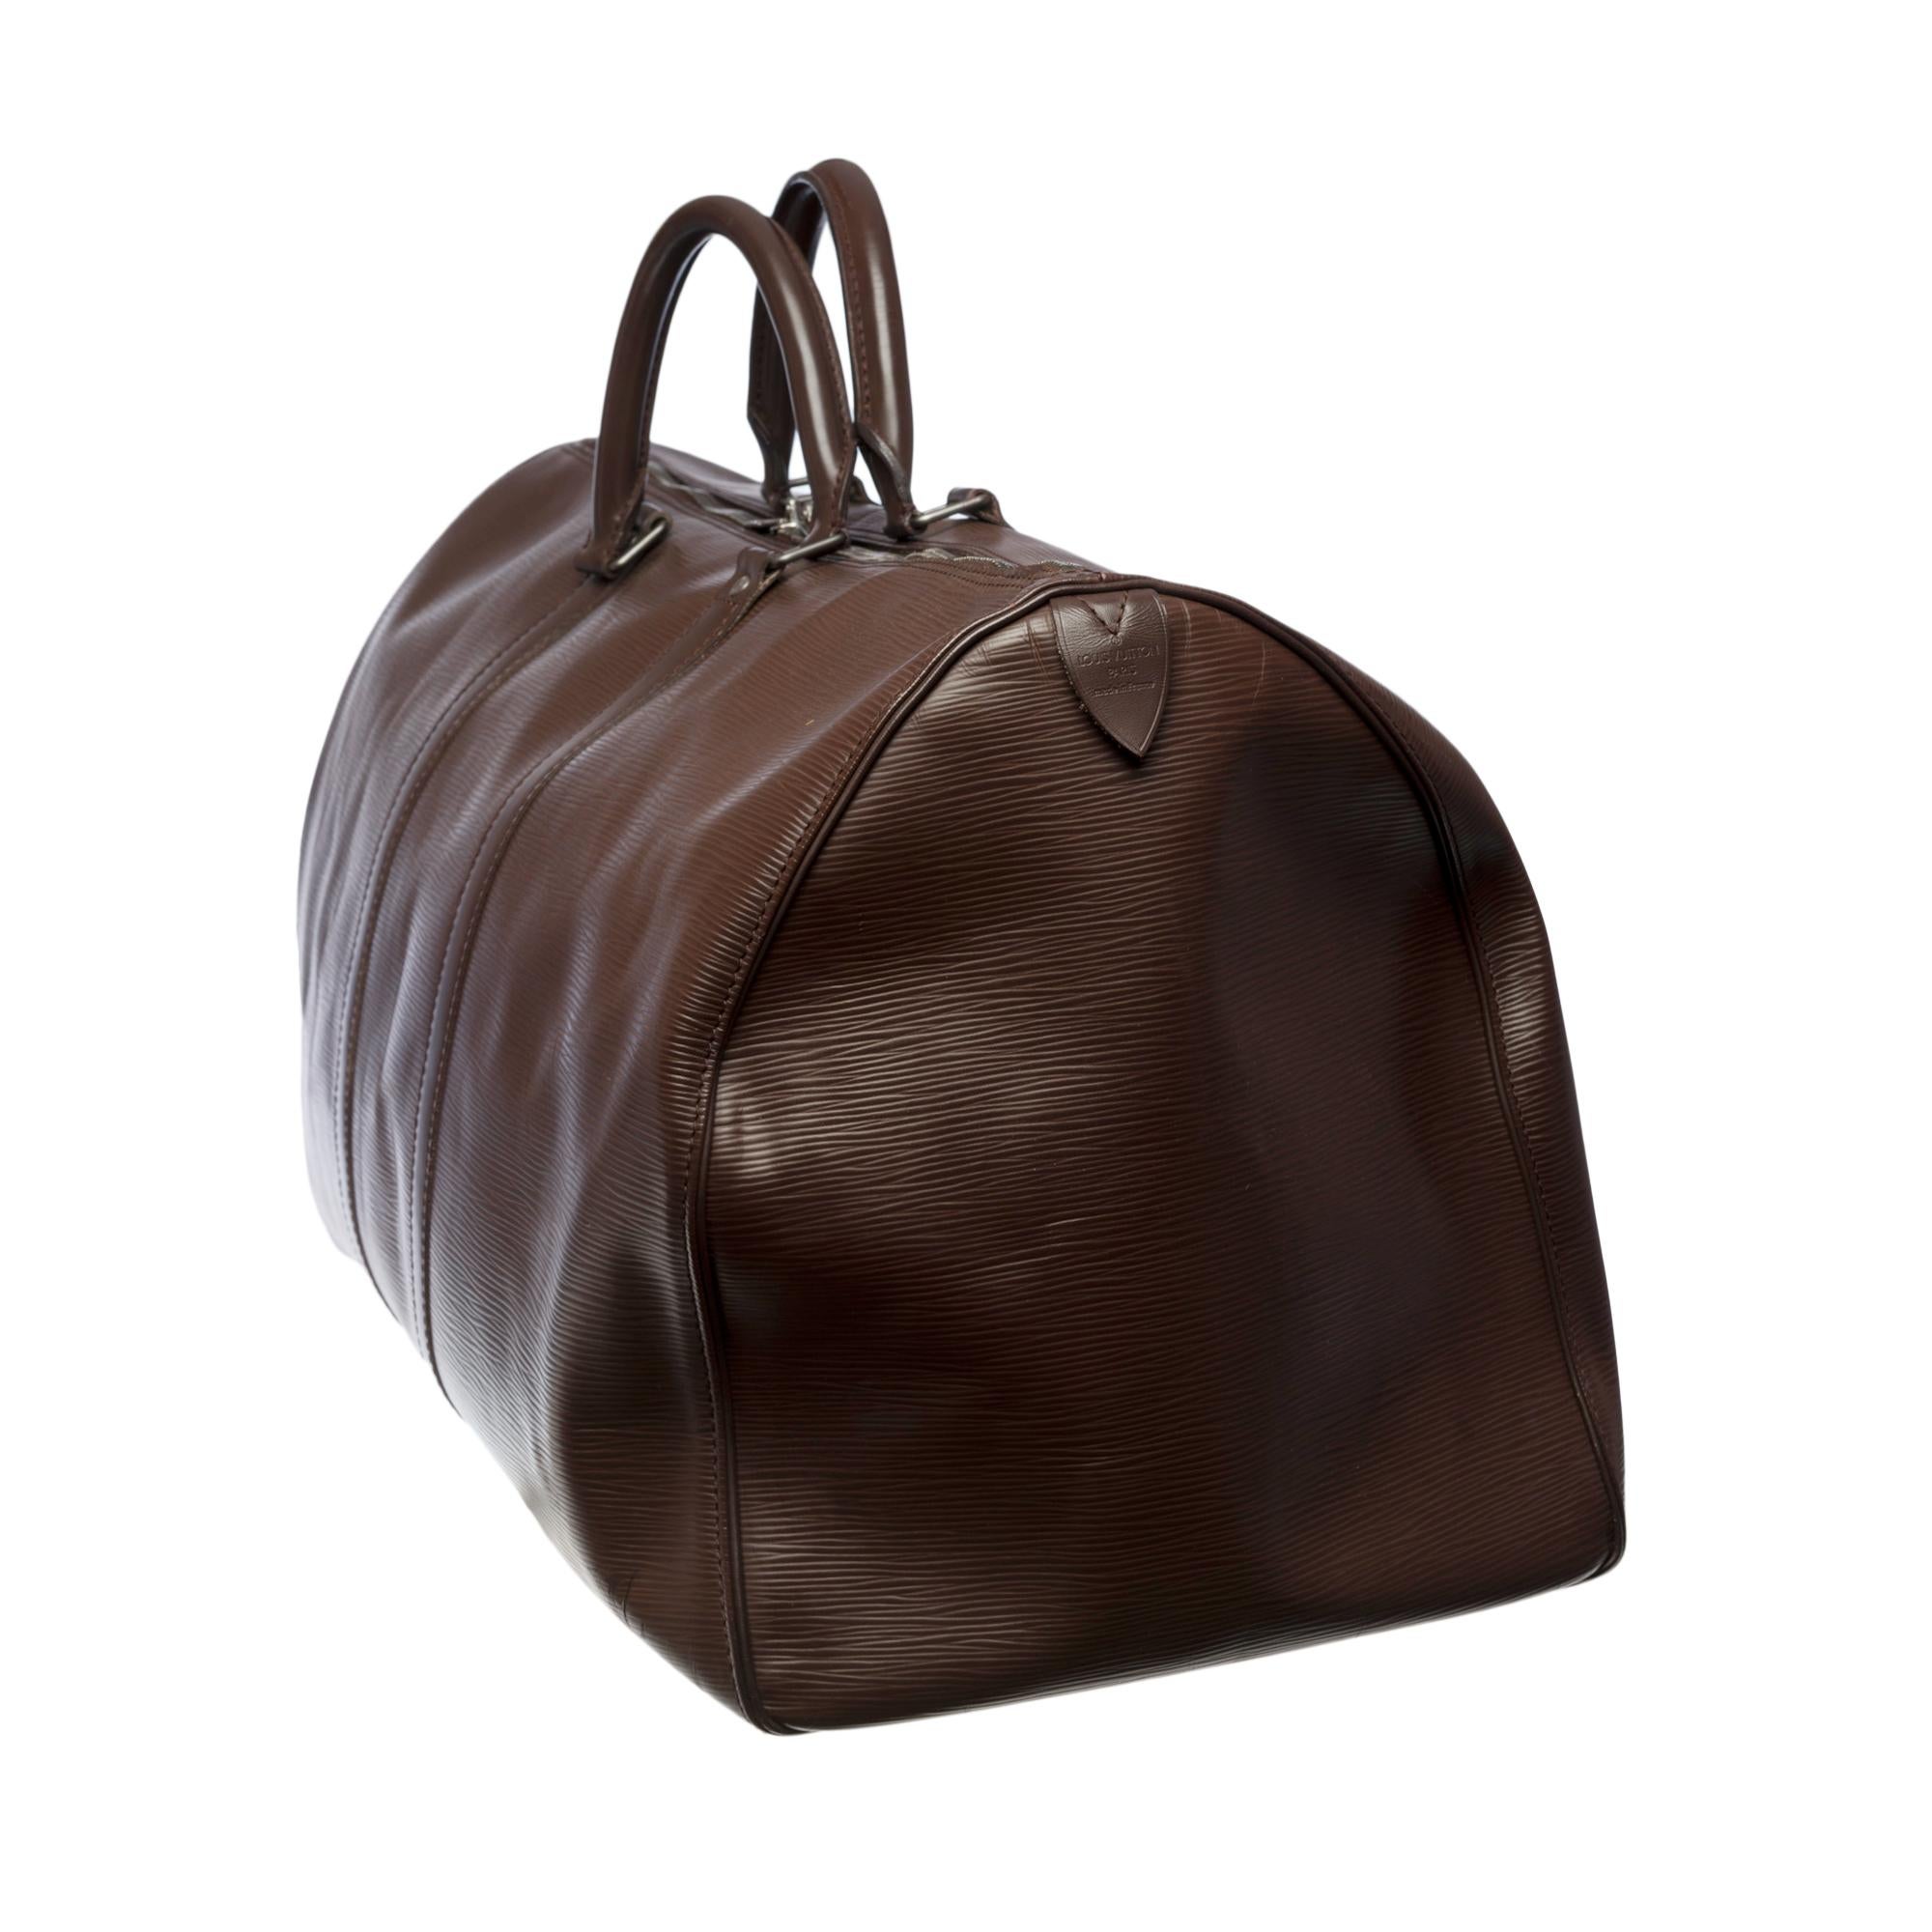 Black Louis Vuitton Keepall 55 Travel bag in Brown épi leather, matte SHW